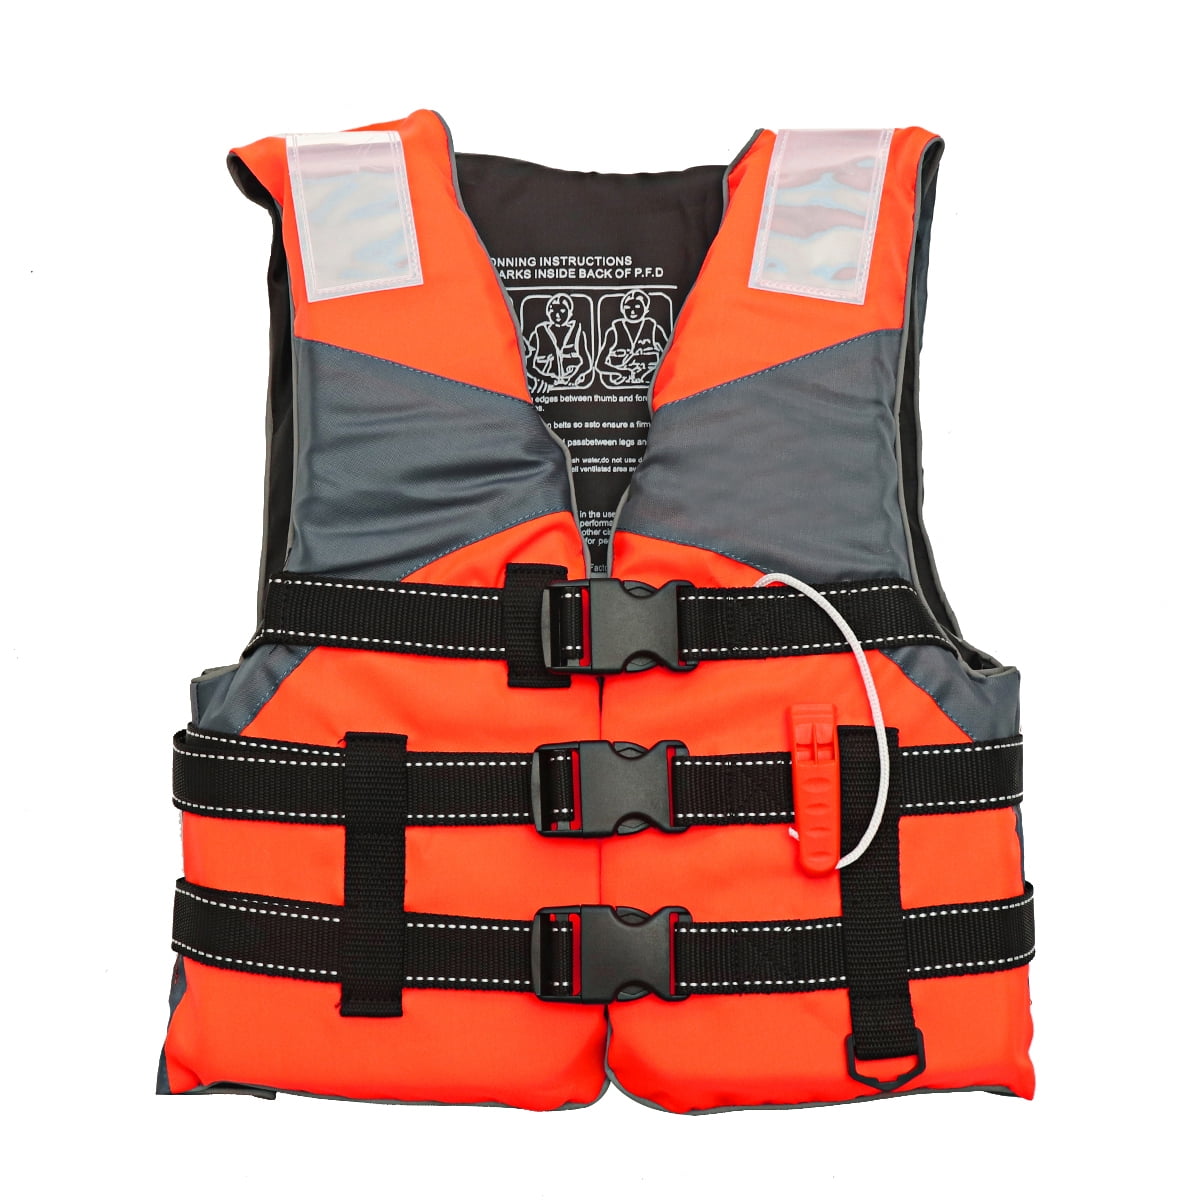 Adult Kid Safety Life Jacket Aid Sailing Boating Swimming Kayak Fishing Vest 